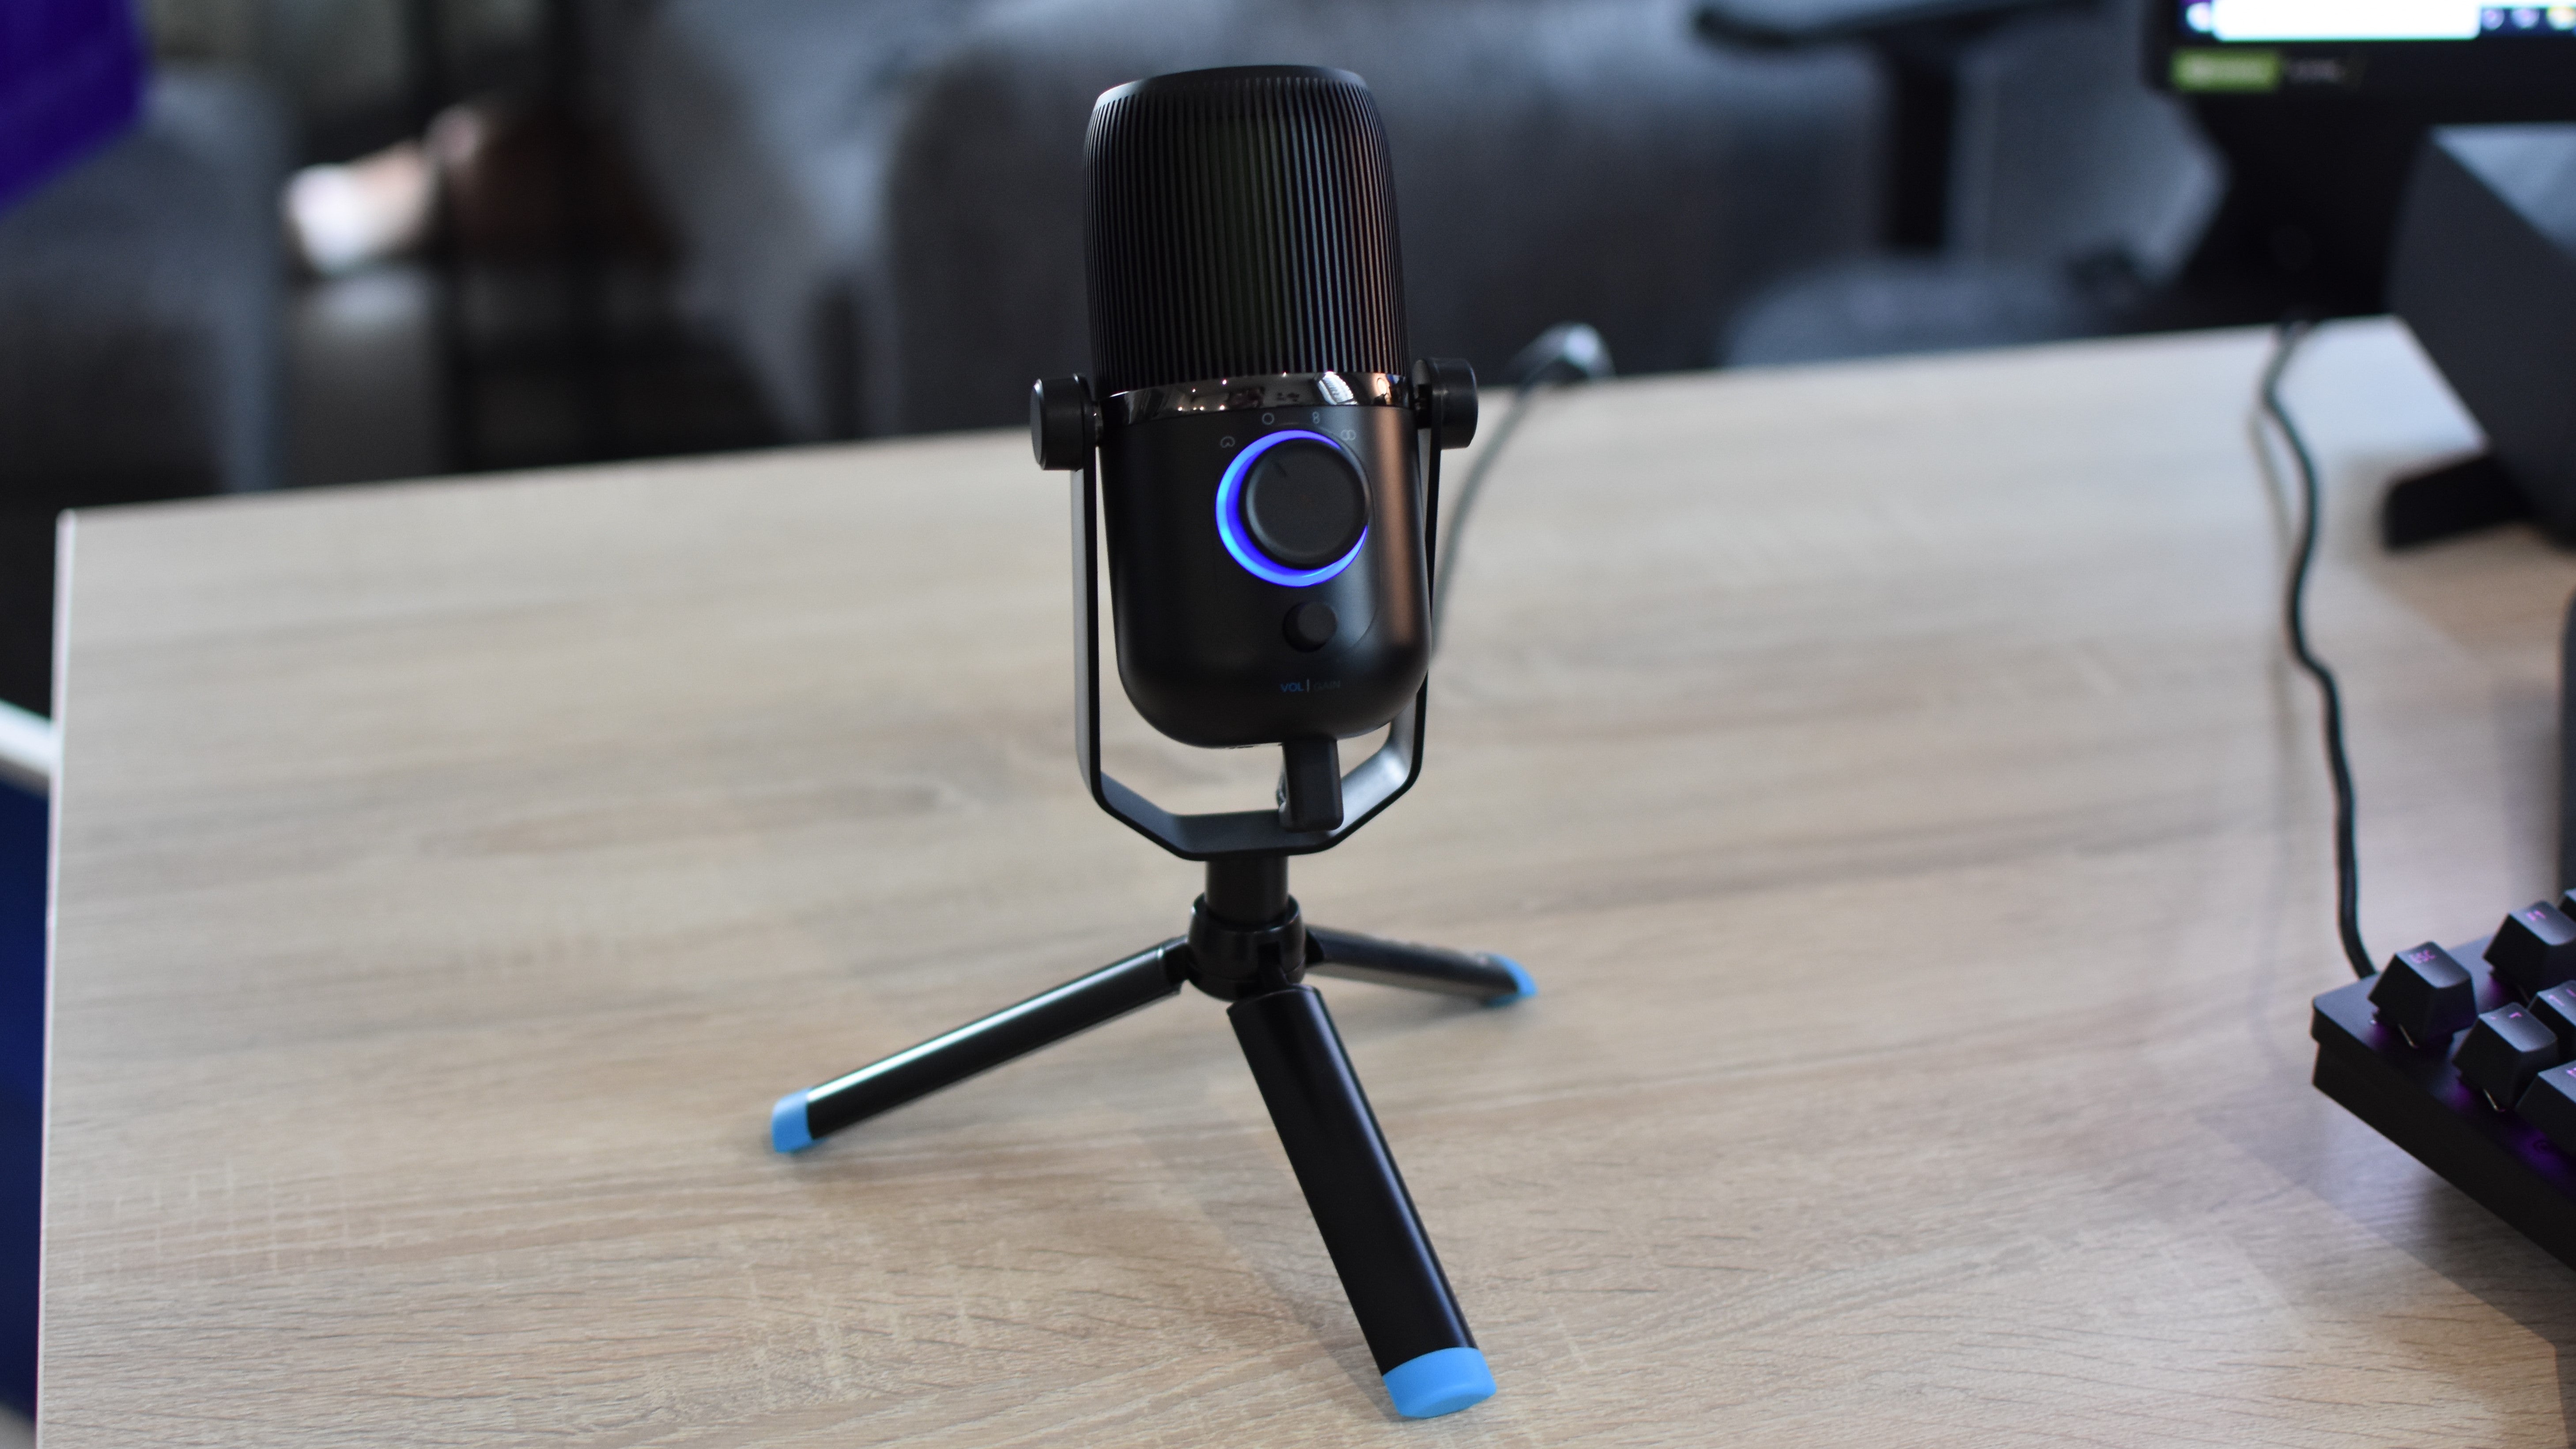 The JLab Talk microphone on a desk.